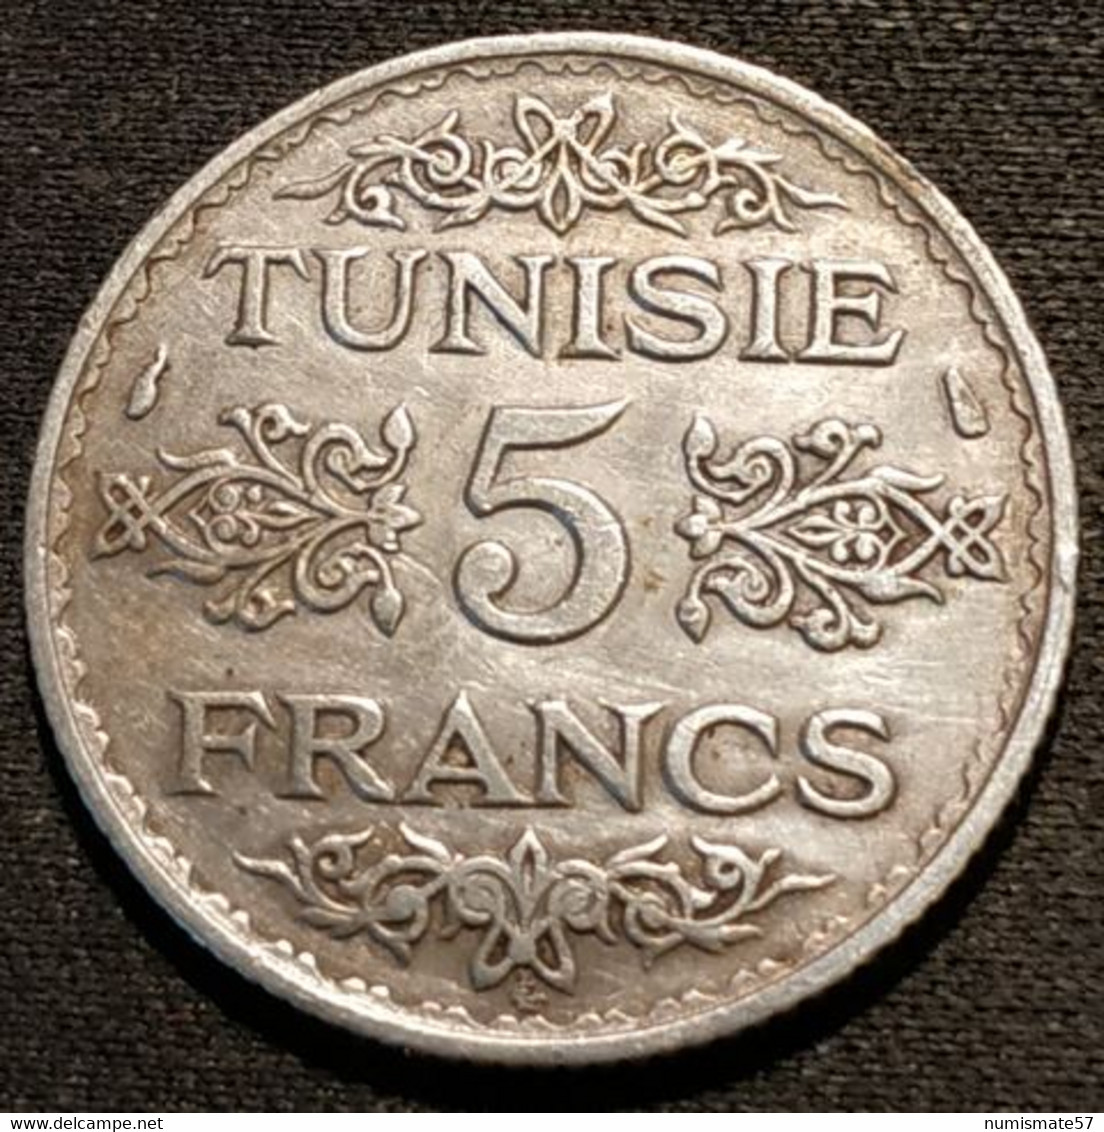 TUNISIE - TUNISIA - 5 FRANCS 1935 ( 1353 ) - Argent - Silver - Ahmad Pasha - Protectorat Français - KM 261 - Túnez